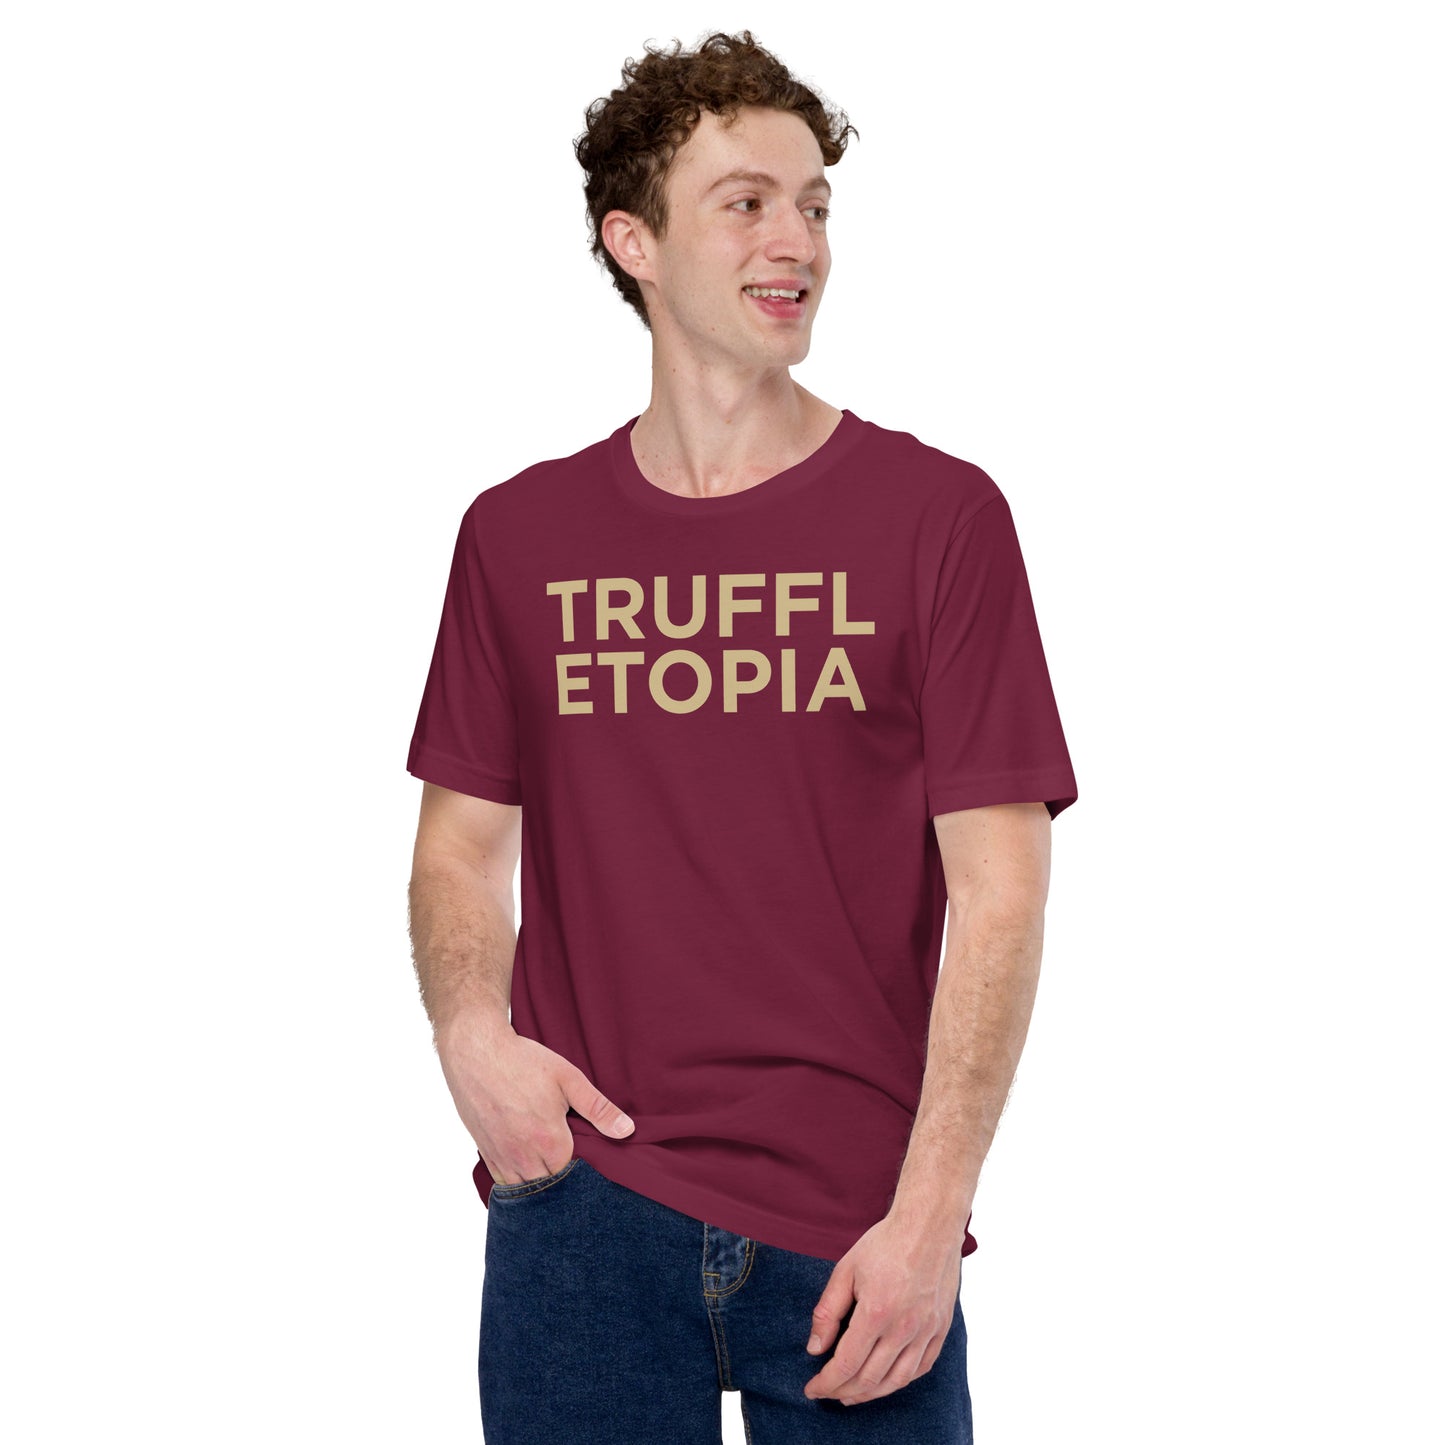 Etopia T-Shirt - Unisex